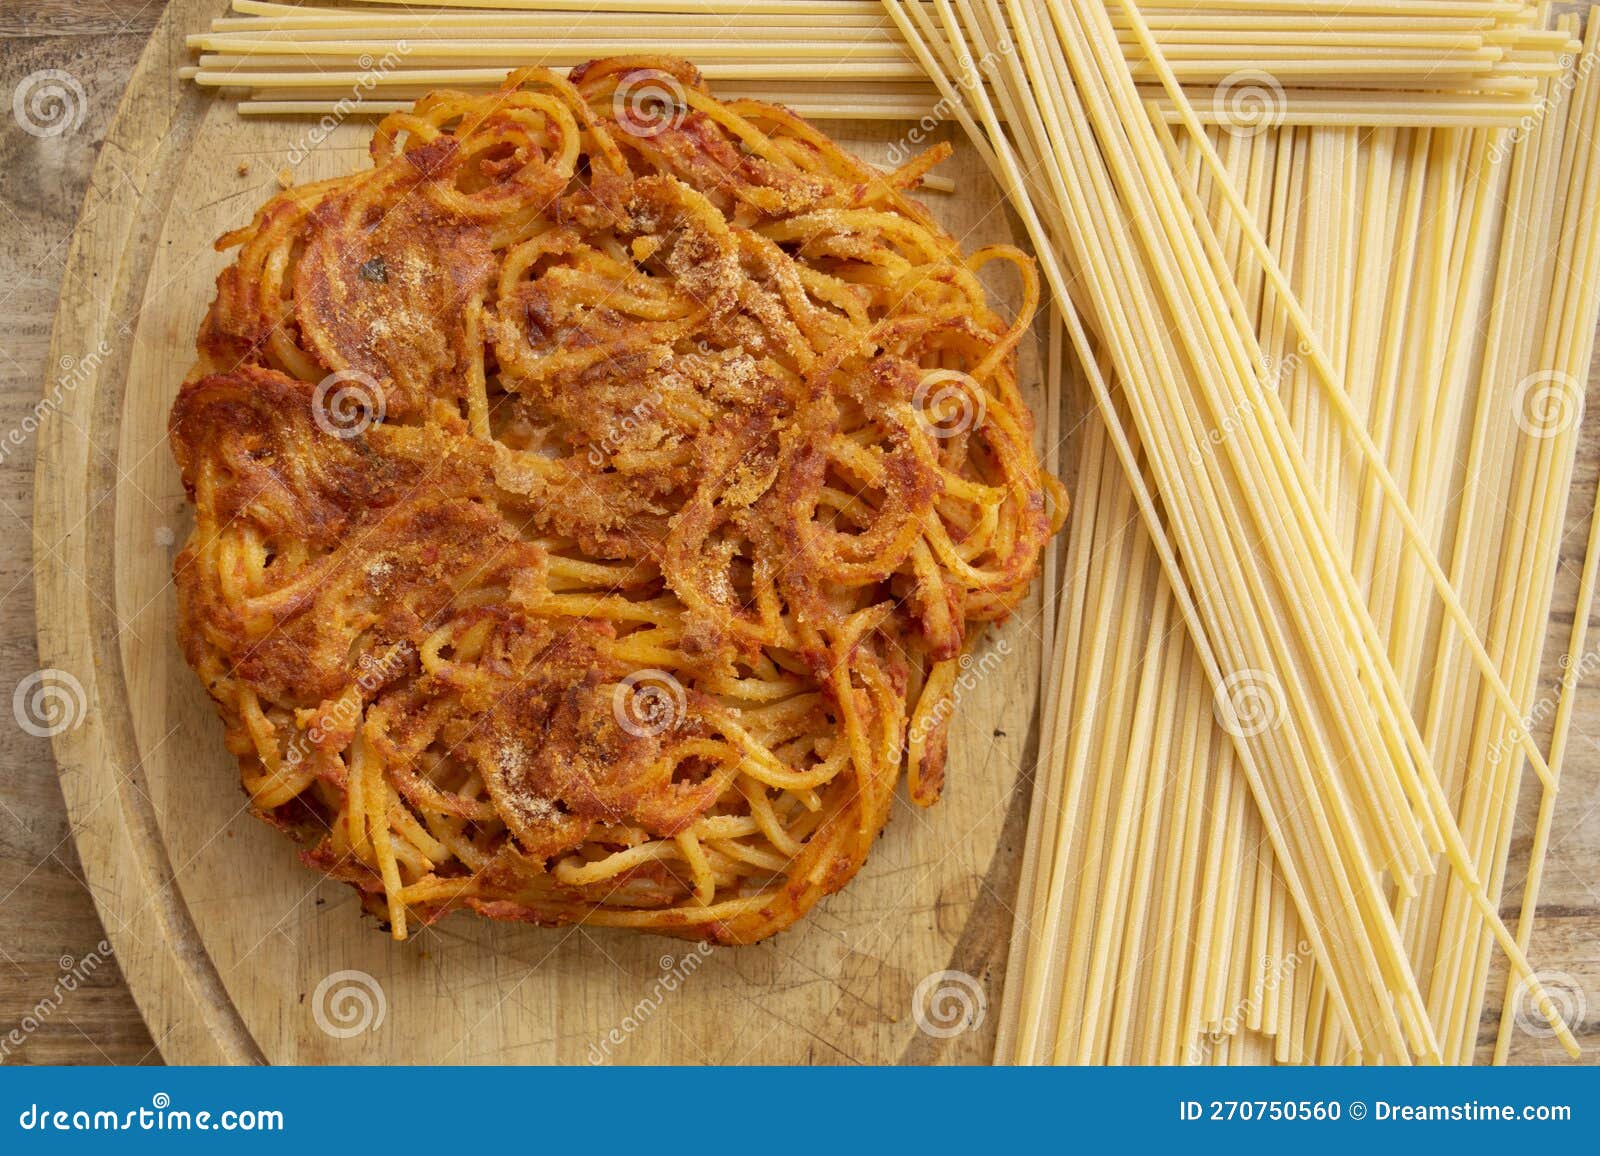 frittata of spaghetti pasta